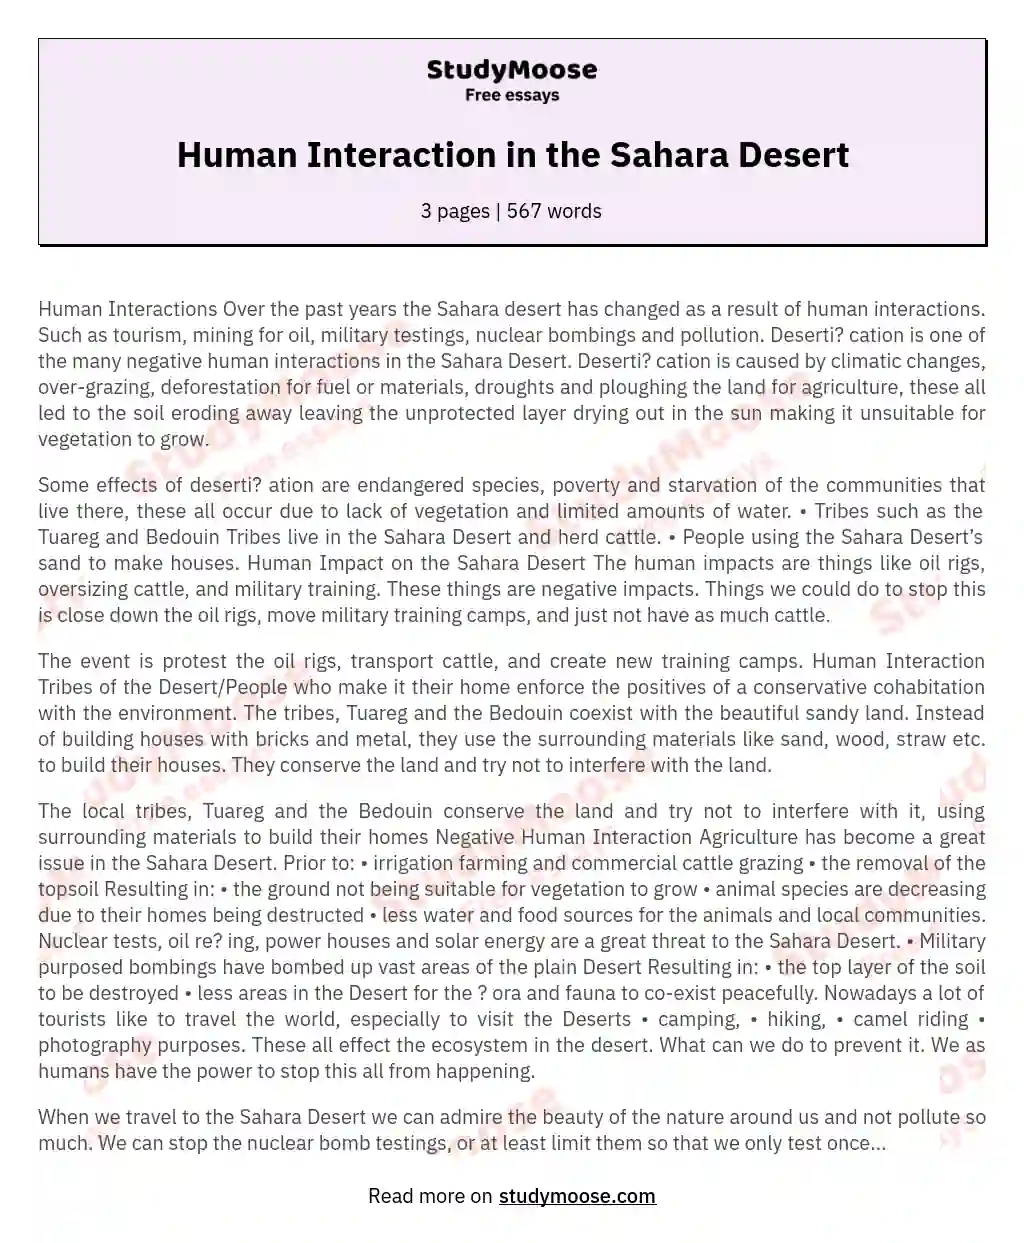 Human Interaction in the Sahara Desert essay